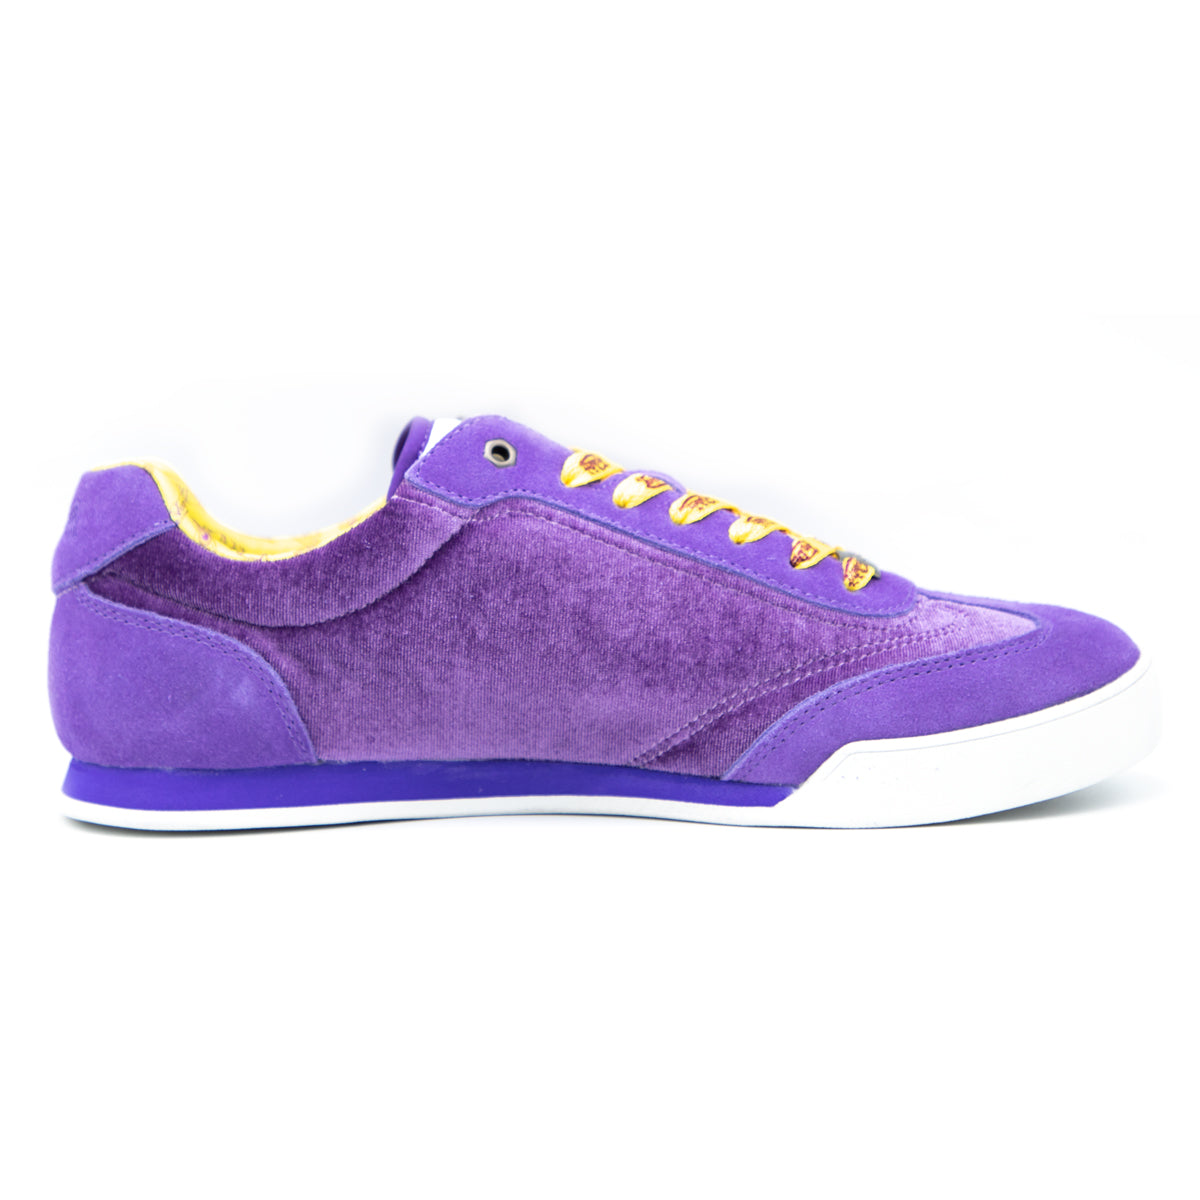 purple sneakers womens